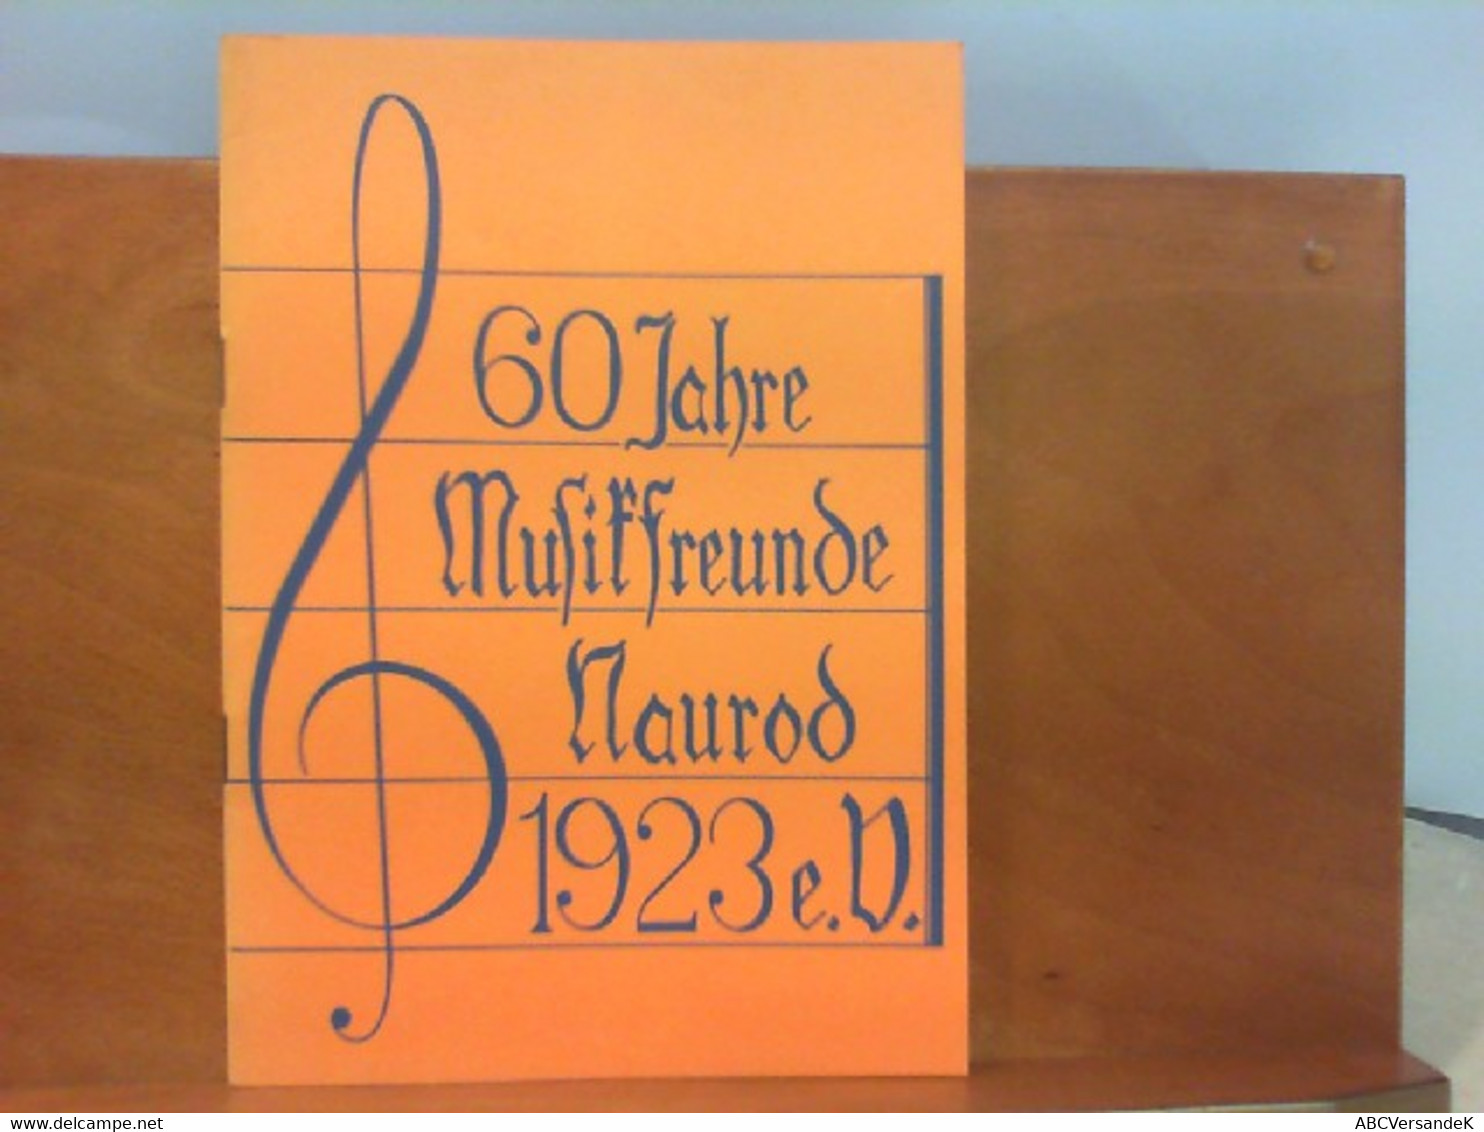 60 Jahre Musikfreunde Naurod 1923 E. V. - Hessen